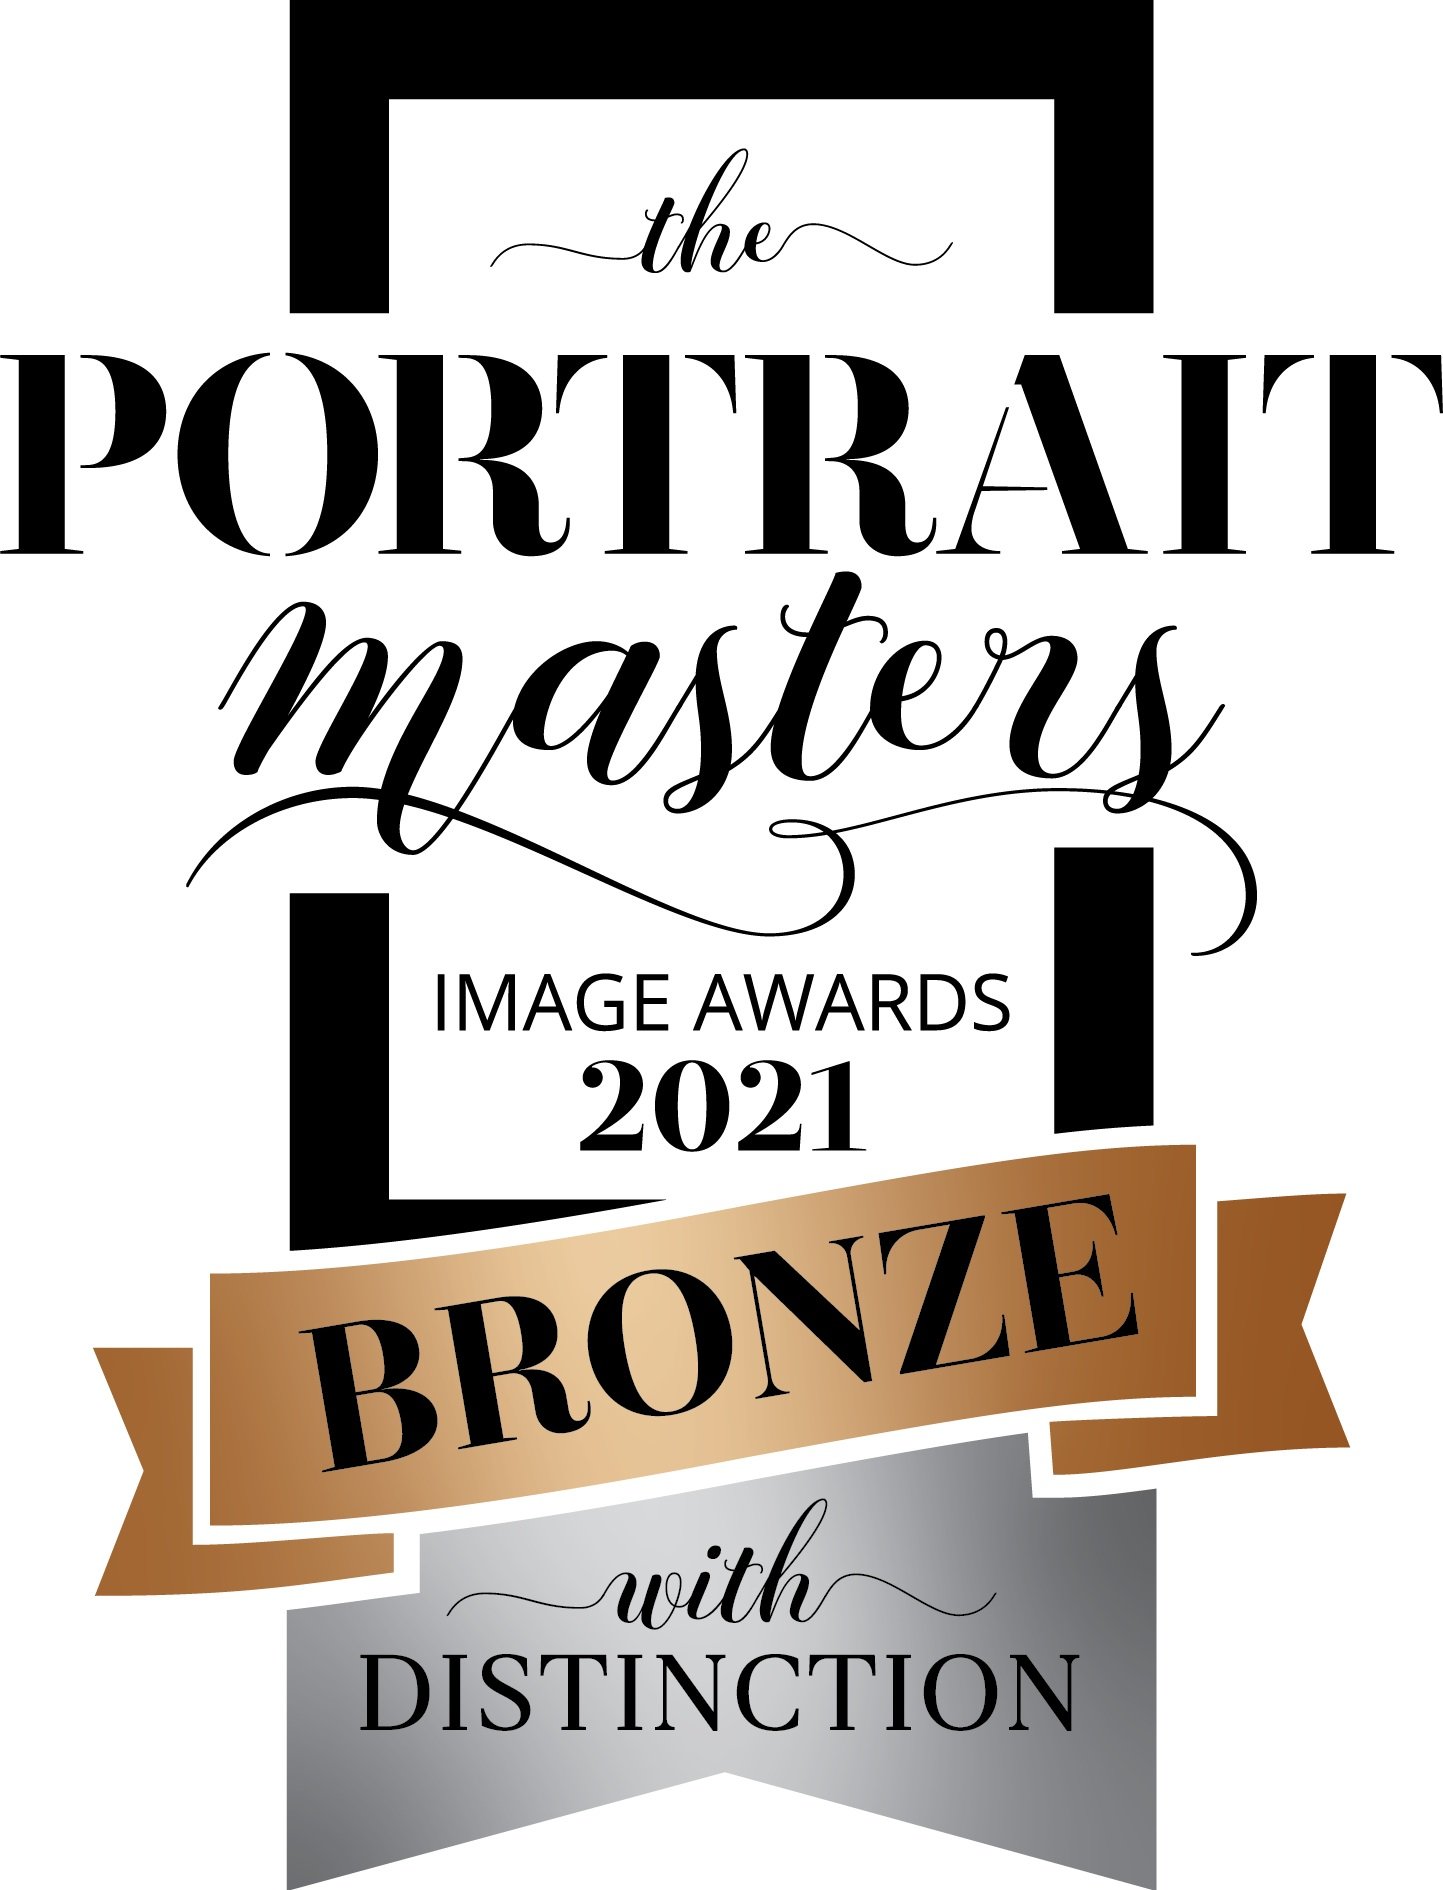 BRONZE+-+TPM+2021+Image+Award+Distinction+%28blk%29.jpg